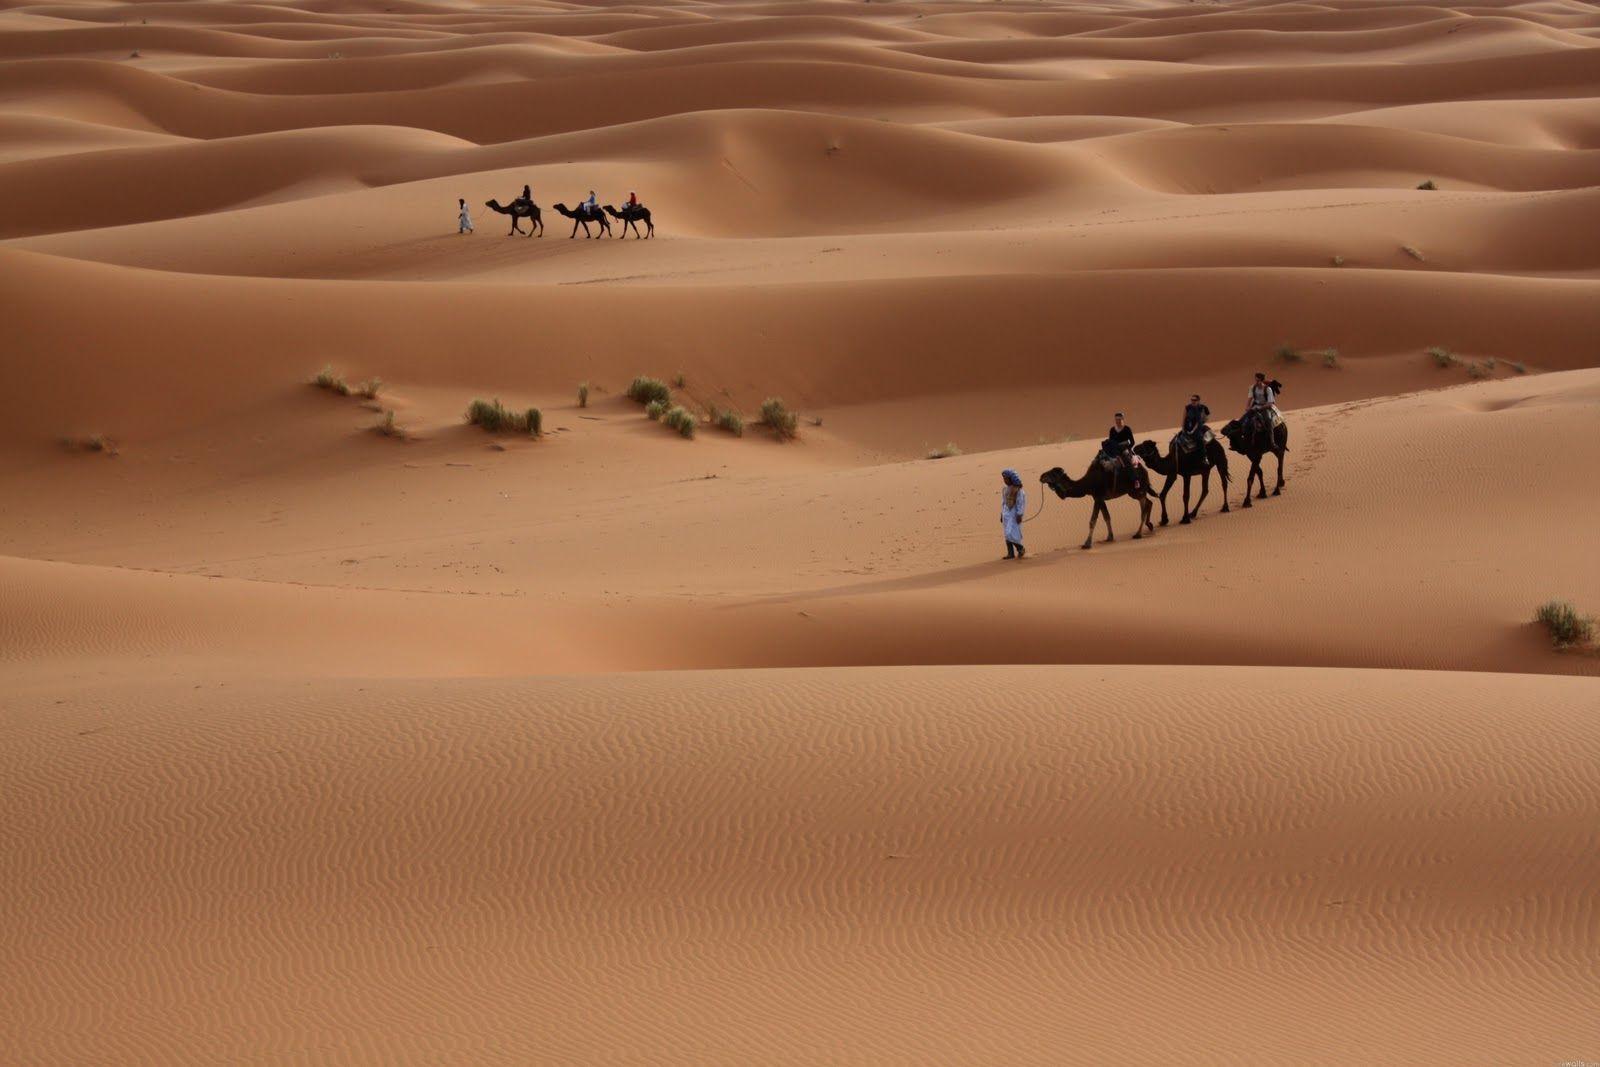 image For > Middle East Desert